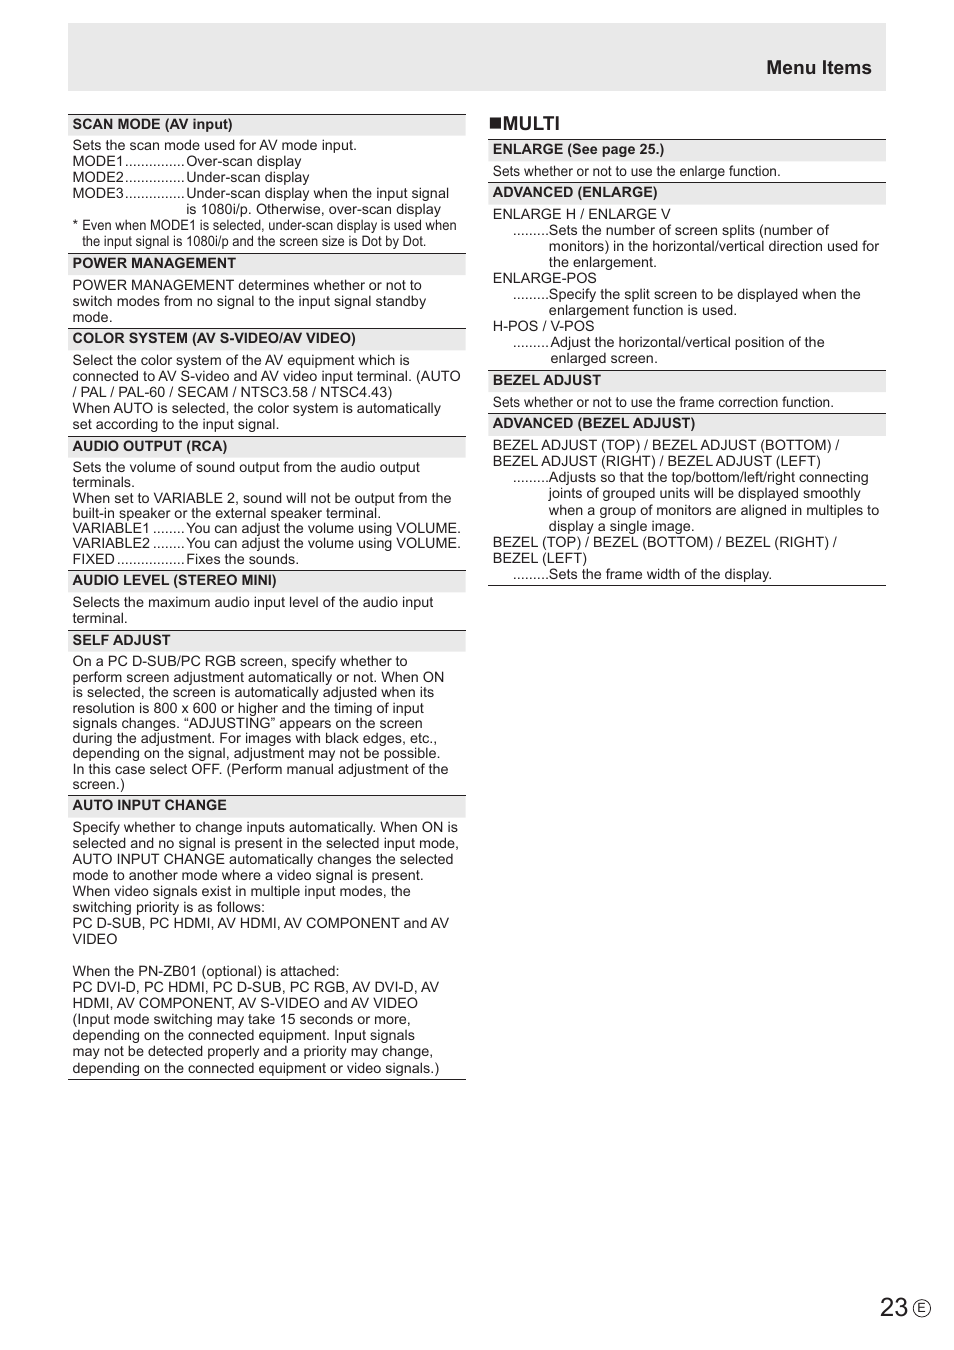 Menu items, Nmulti | Sharp PN-E802 User Manual | Page 23 / 56